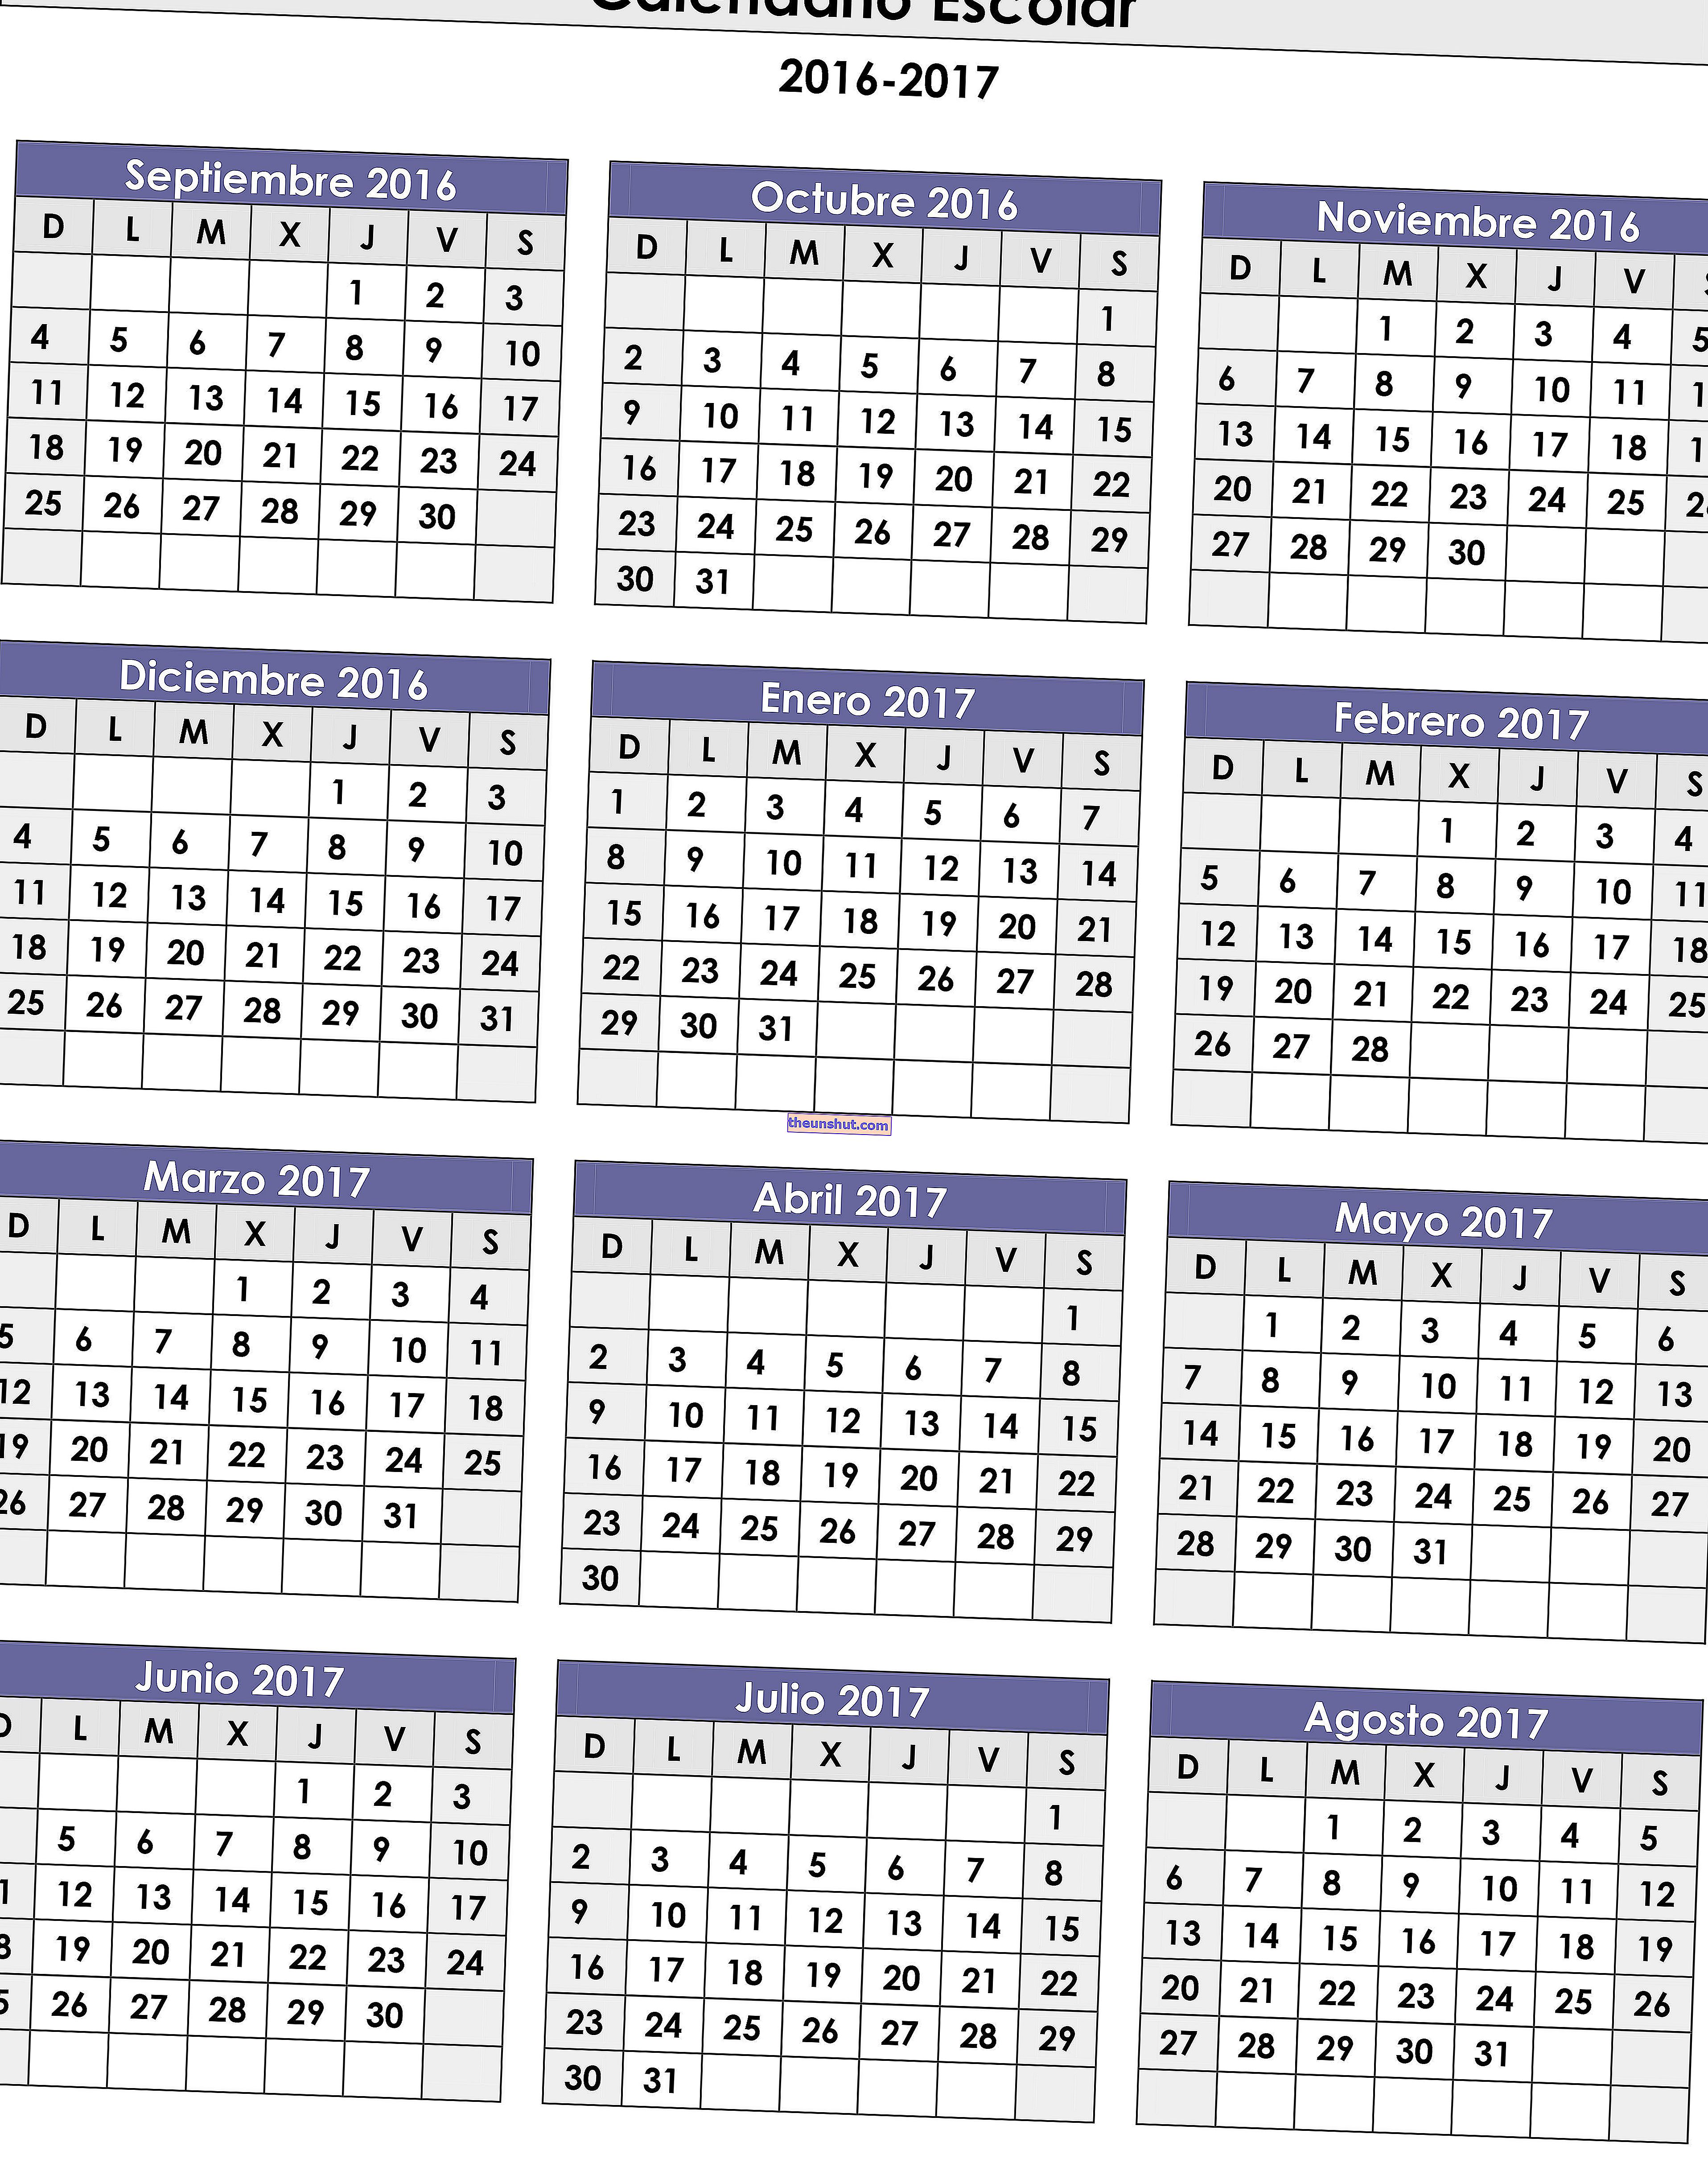 Calendario scolastico 2017